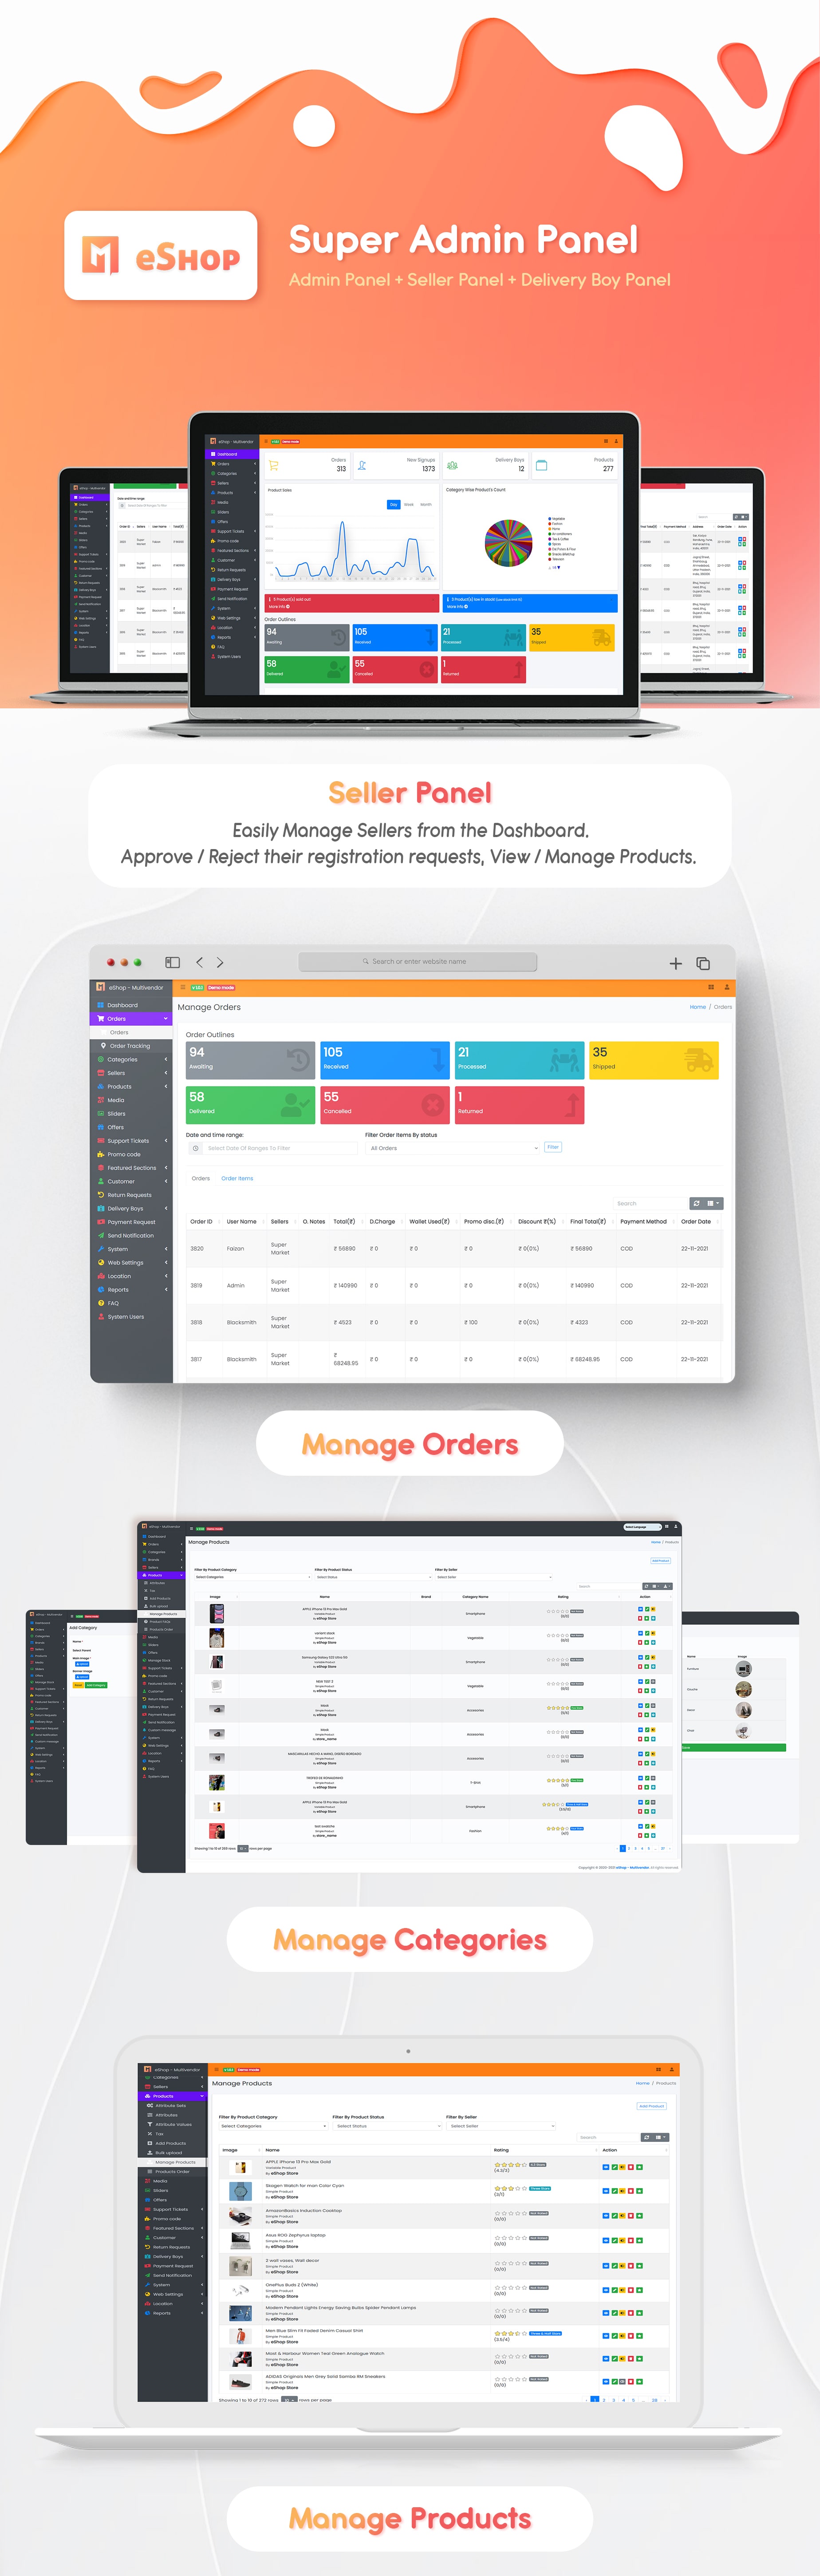 eShop - Multi Vendor eCommerce App & eCommerce Vendor Marketplace Flutter App - 32